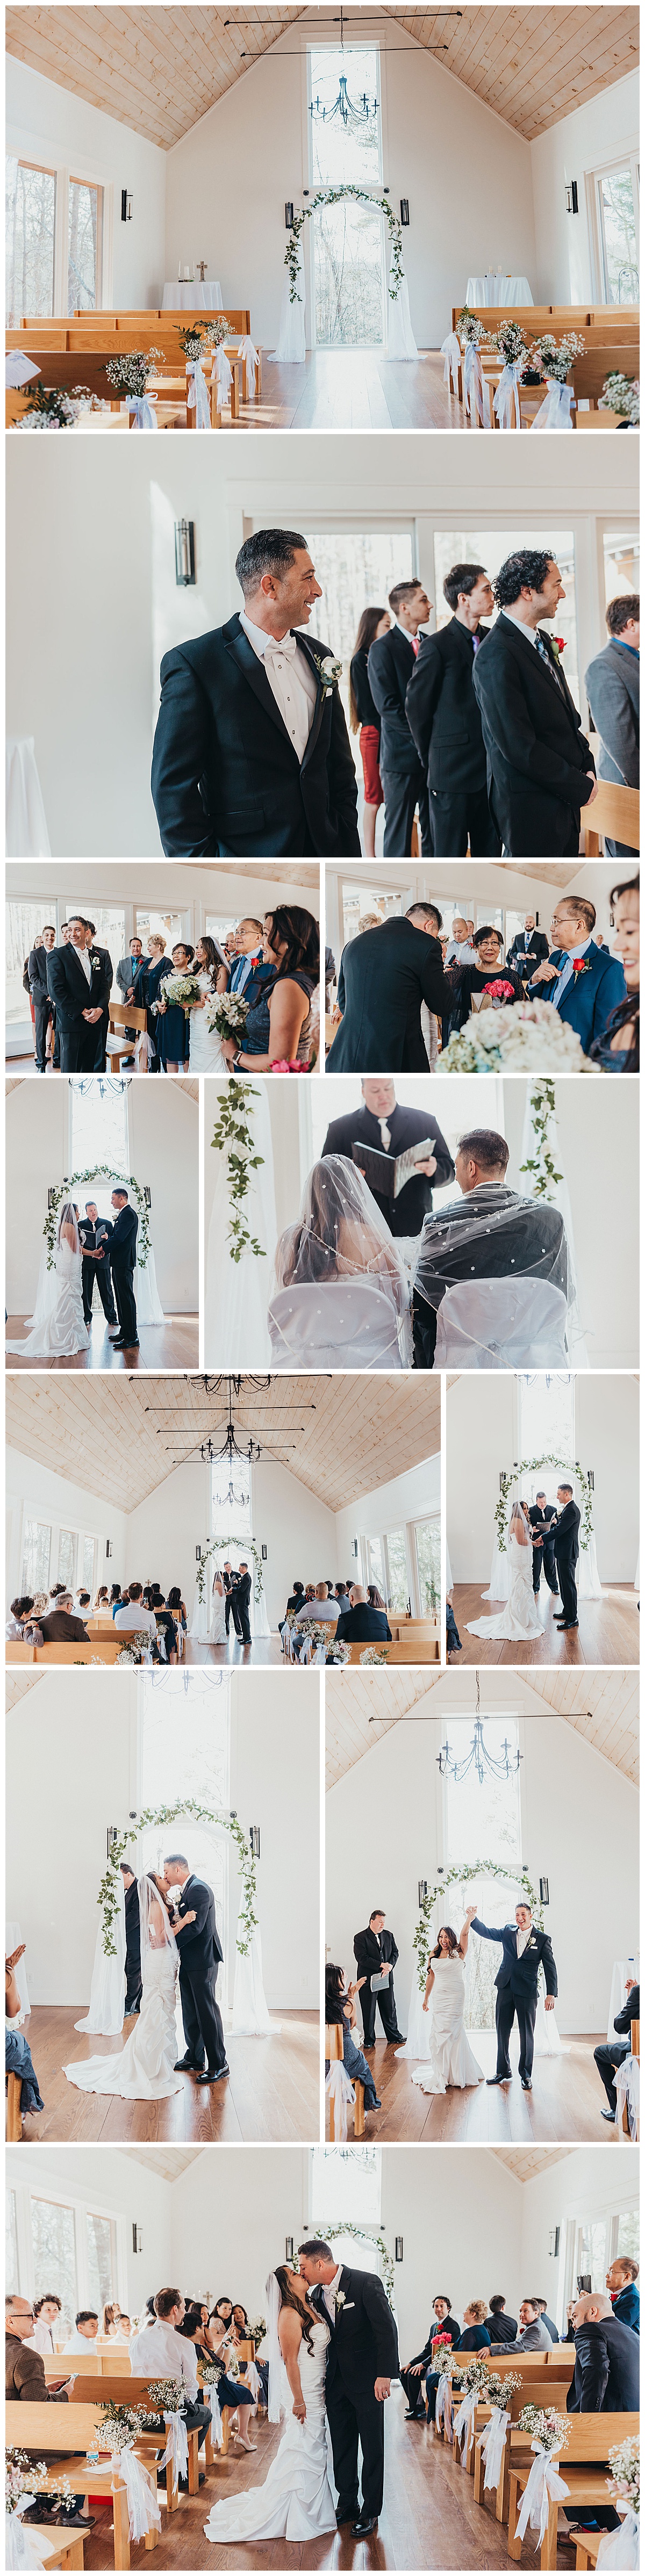 Christine Quarte Photography - Intimate Wedding Ceremony